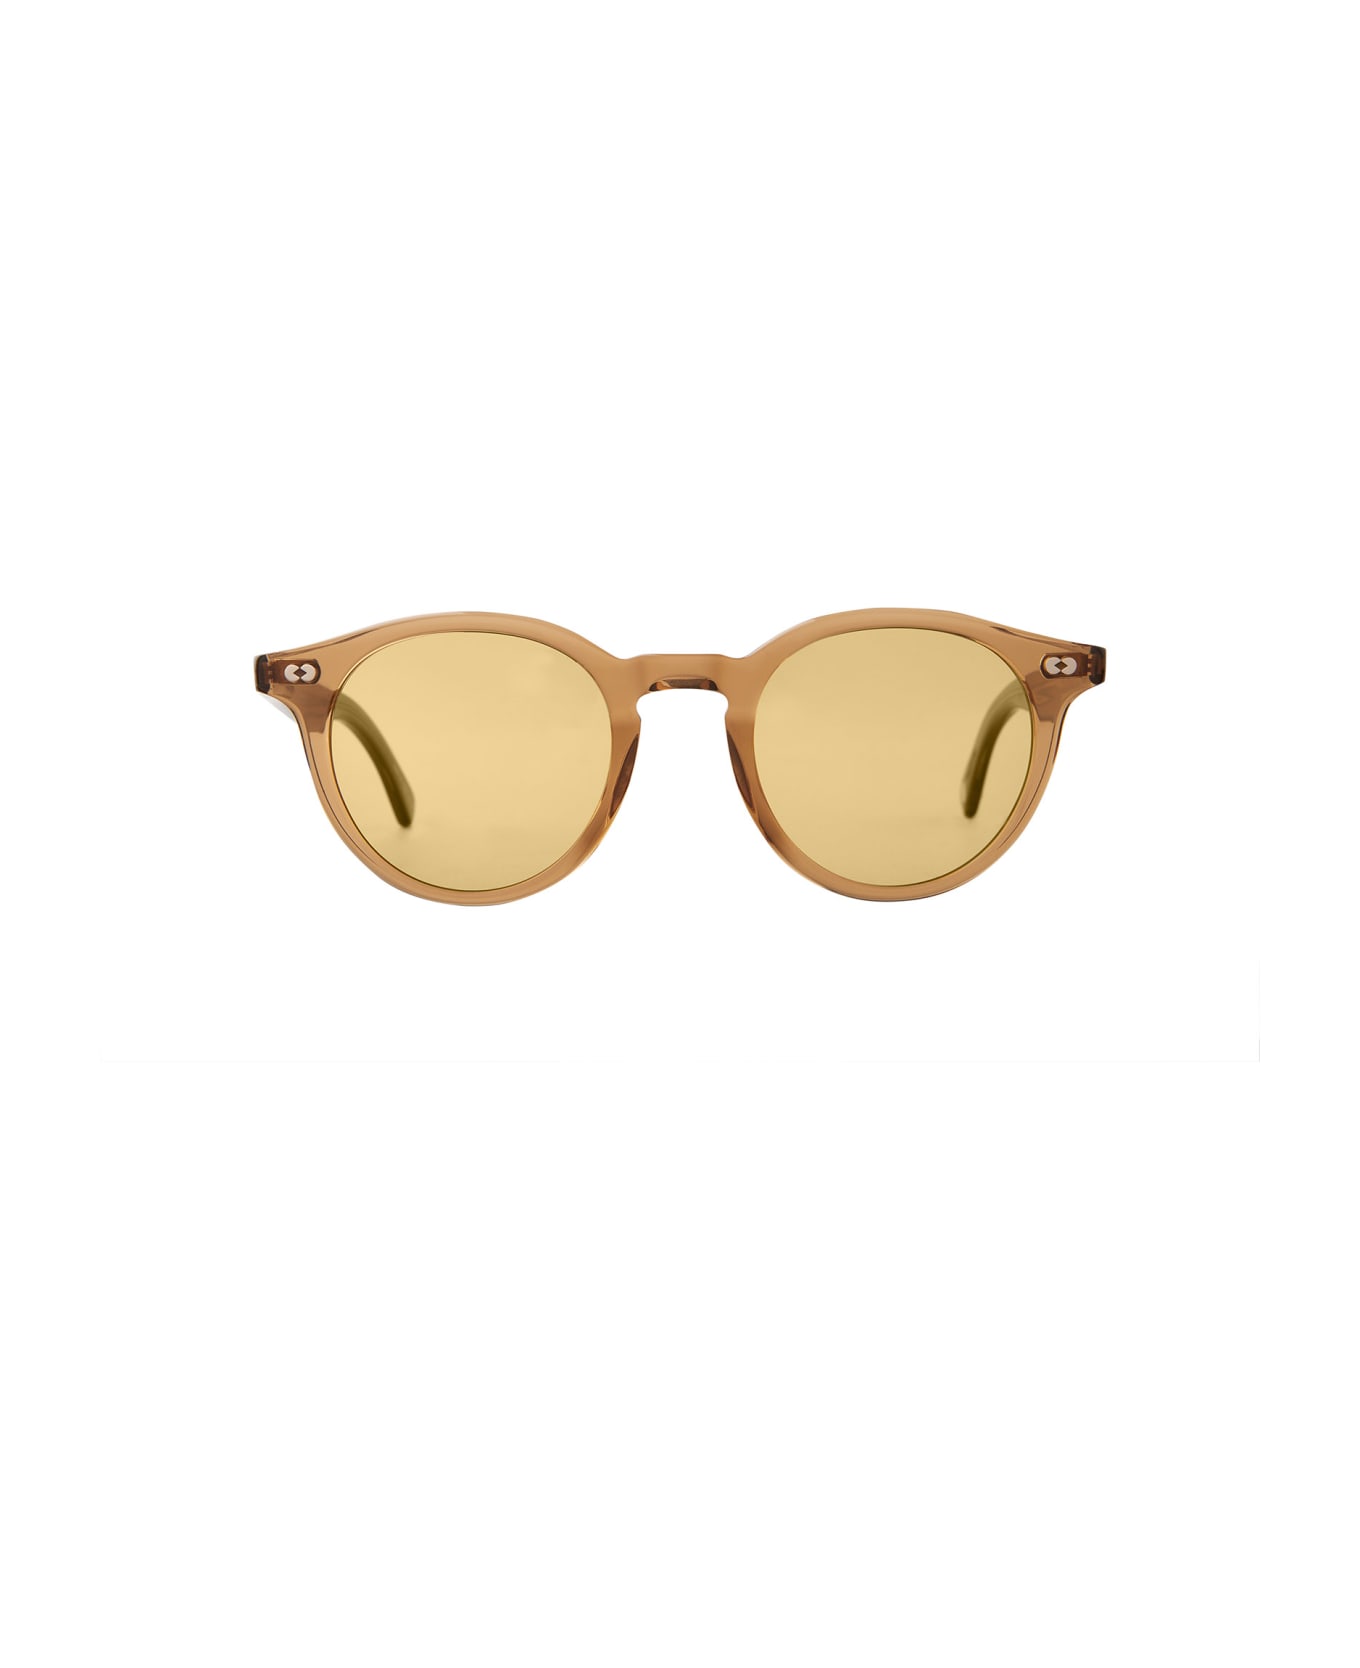 Garrett Leight Clune X Sun Caramel Sunglasses - Caramel サングラス